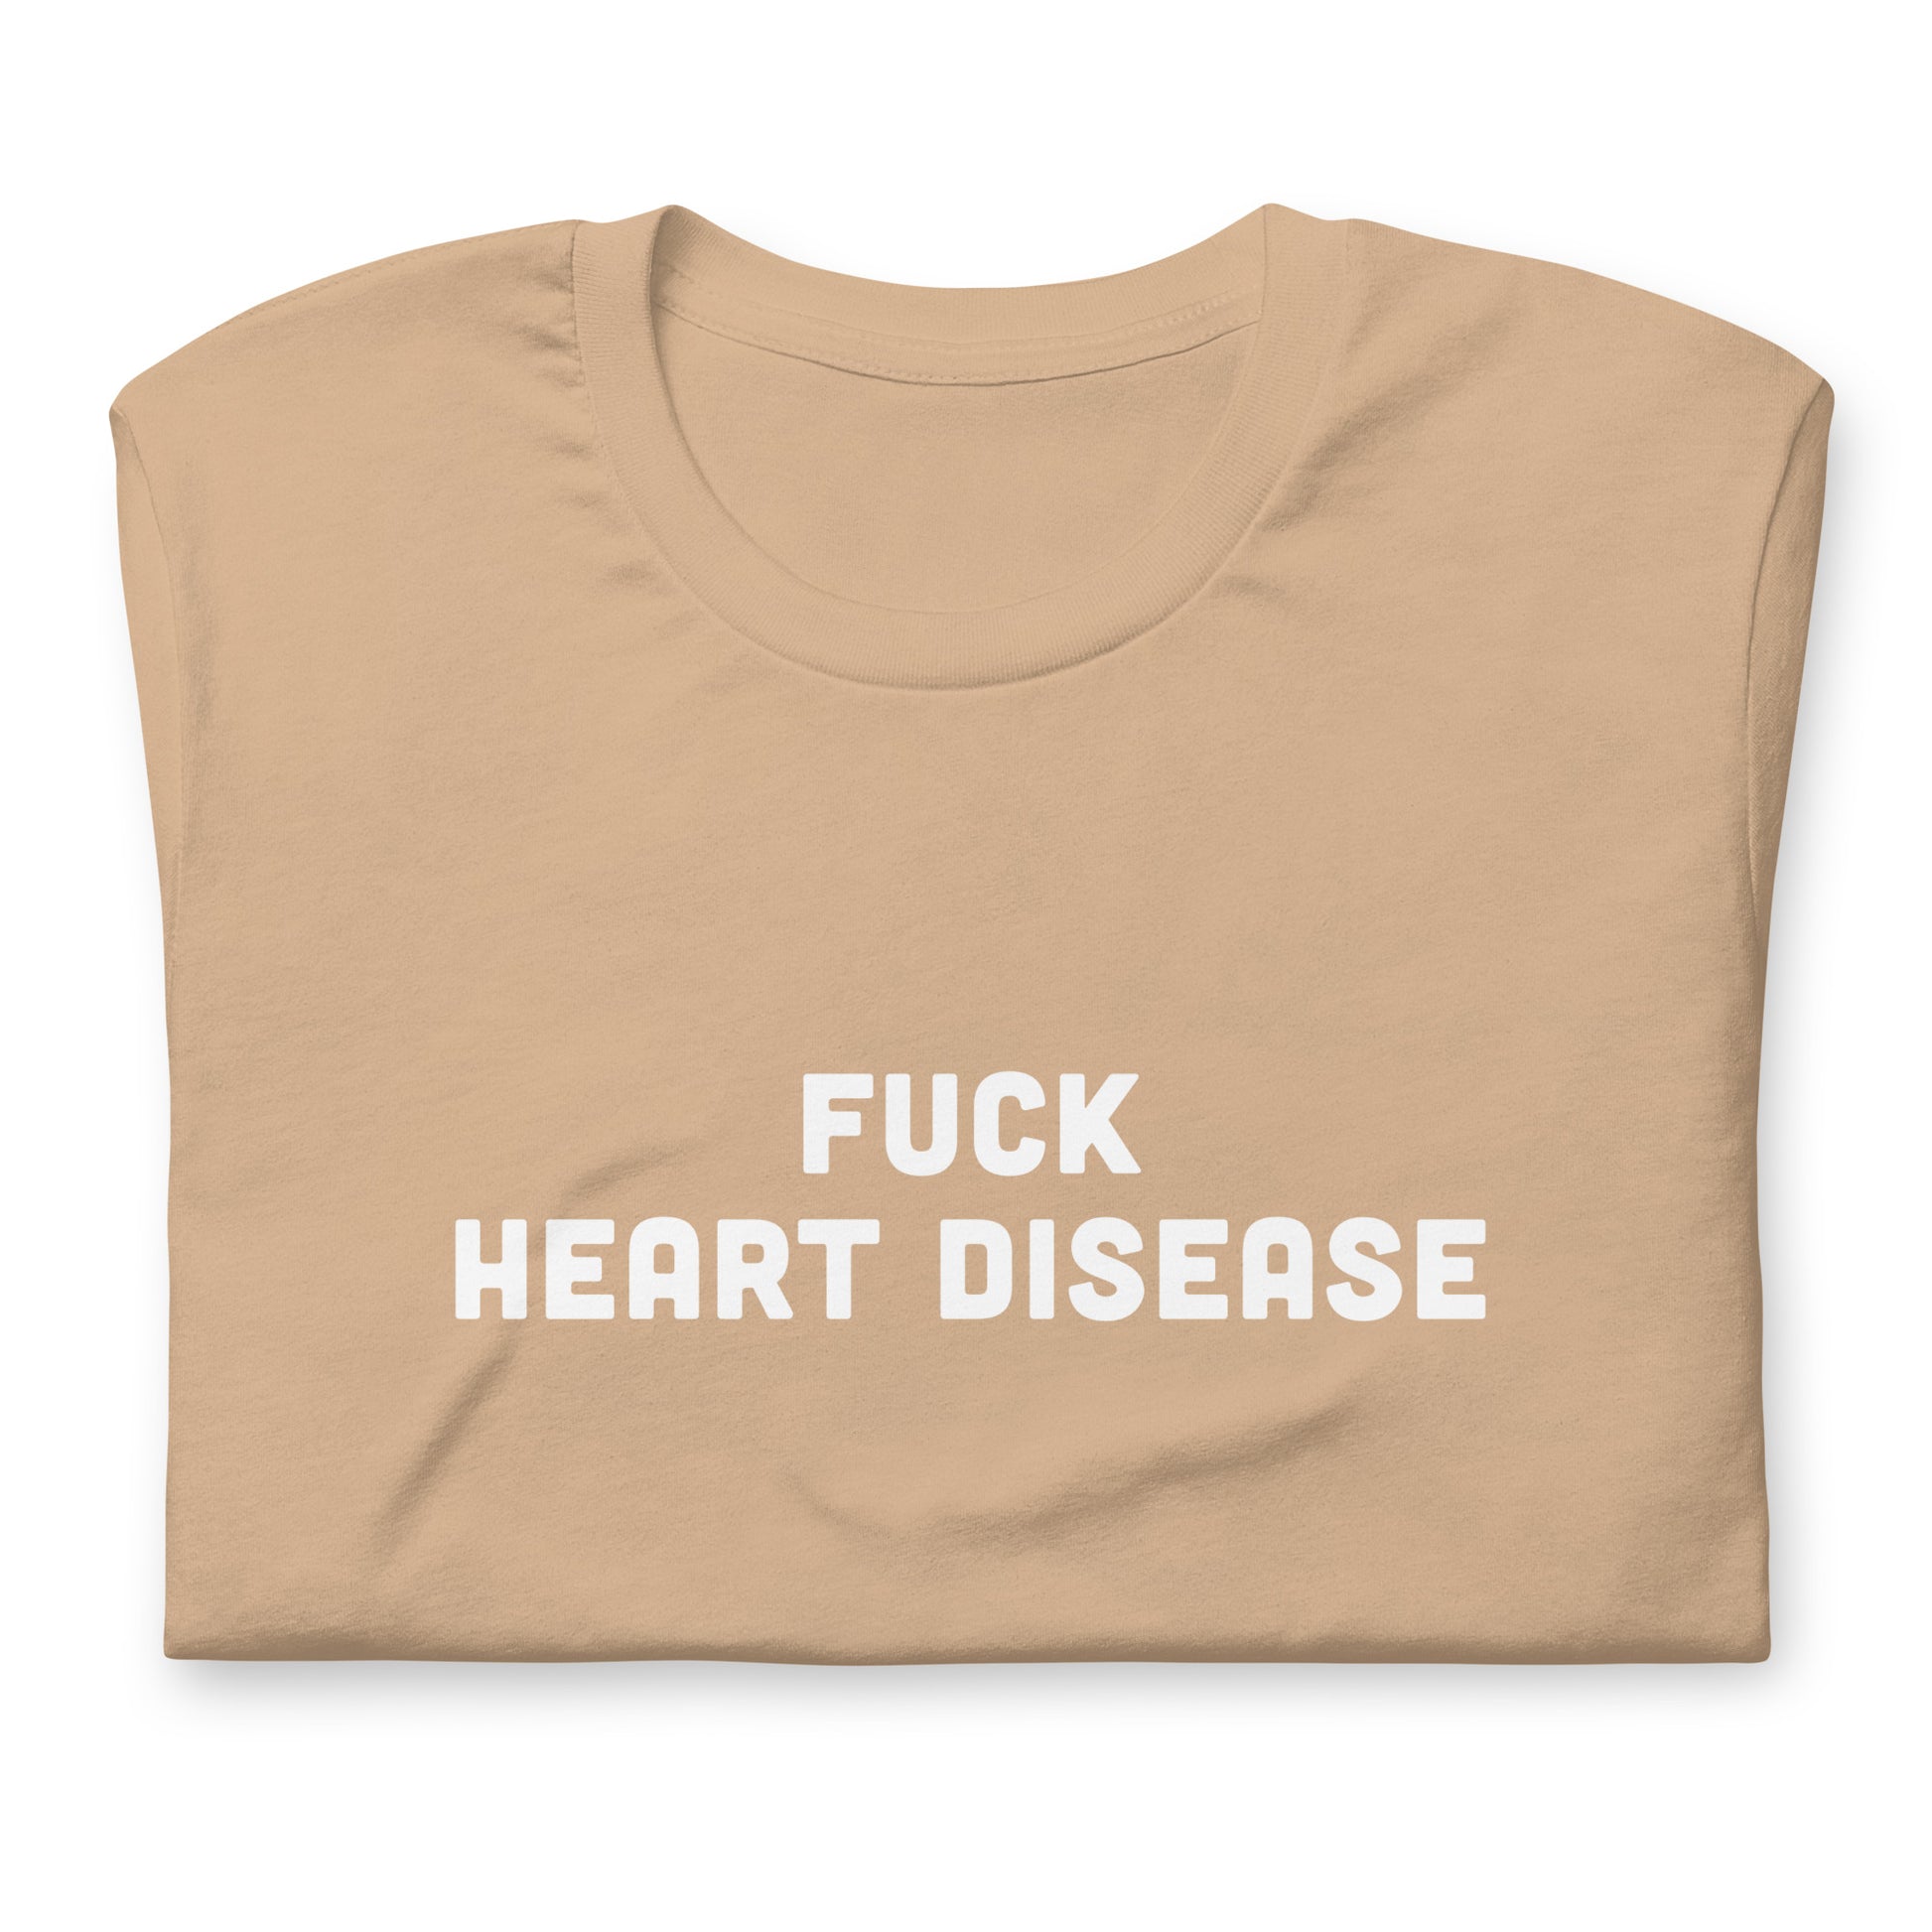 Fuck Heart Disease T-Shirt Size XL Color Forest